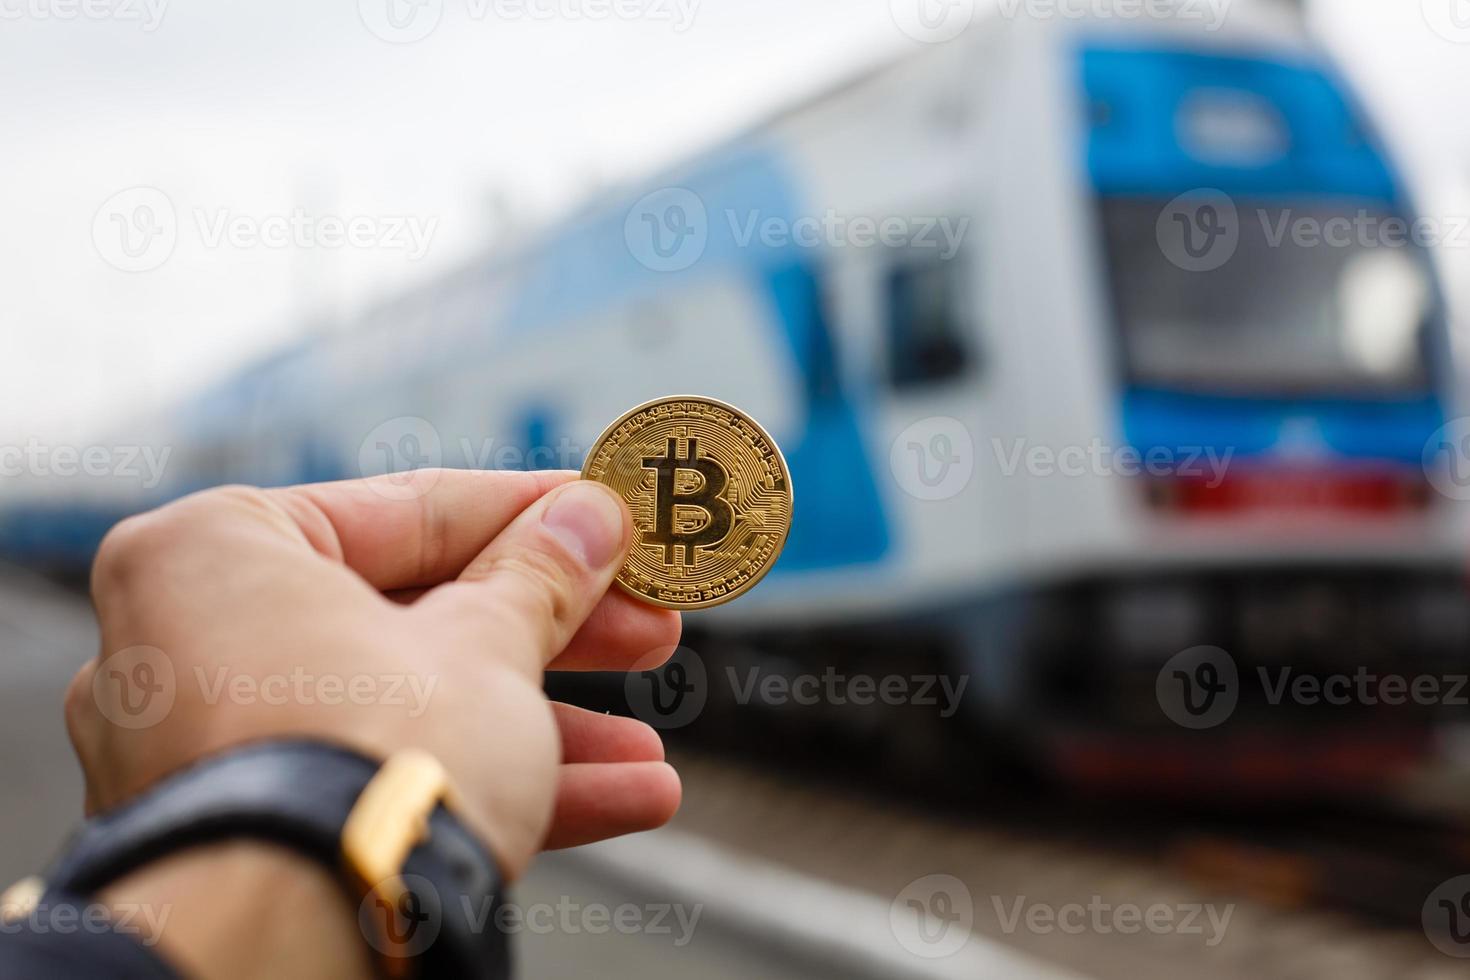 Hand holding golden bitcoin virtual money train photo